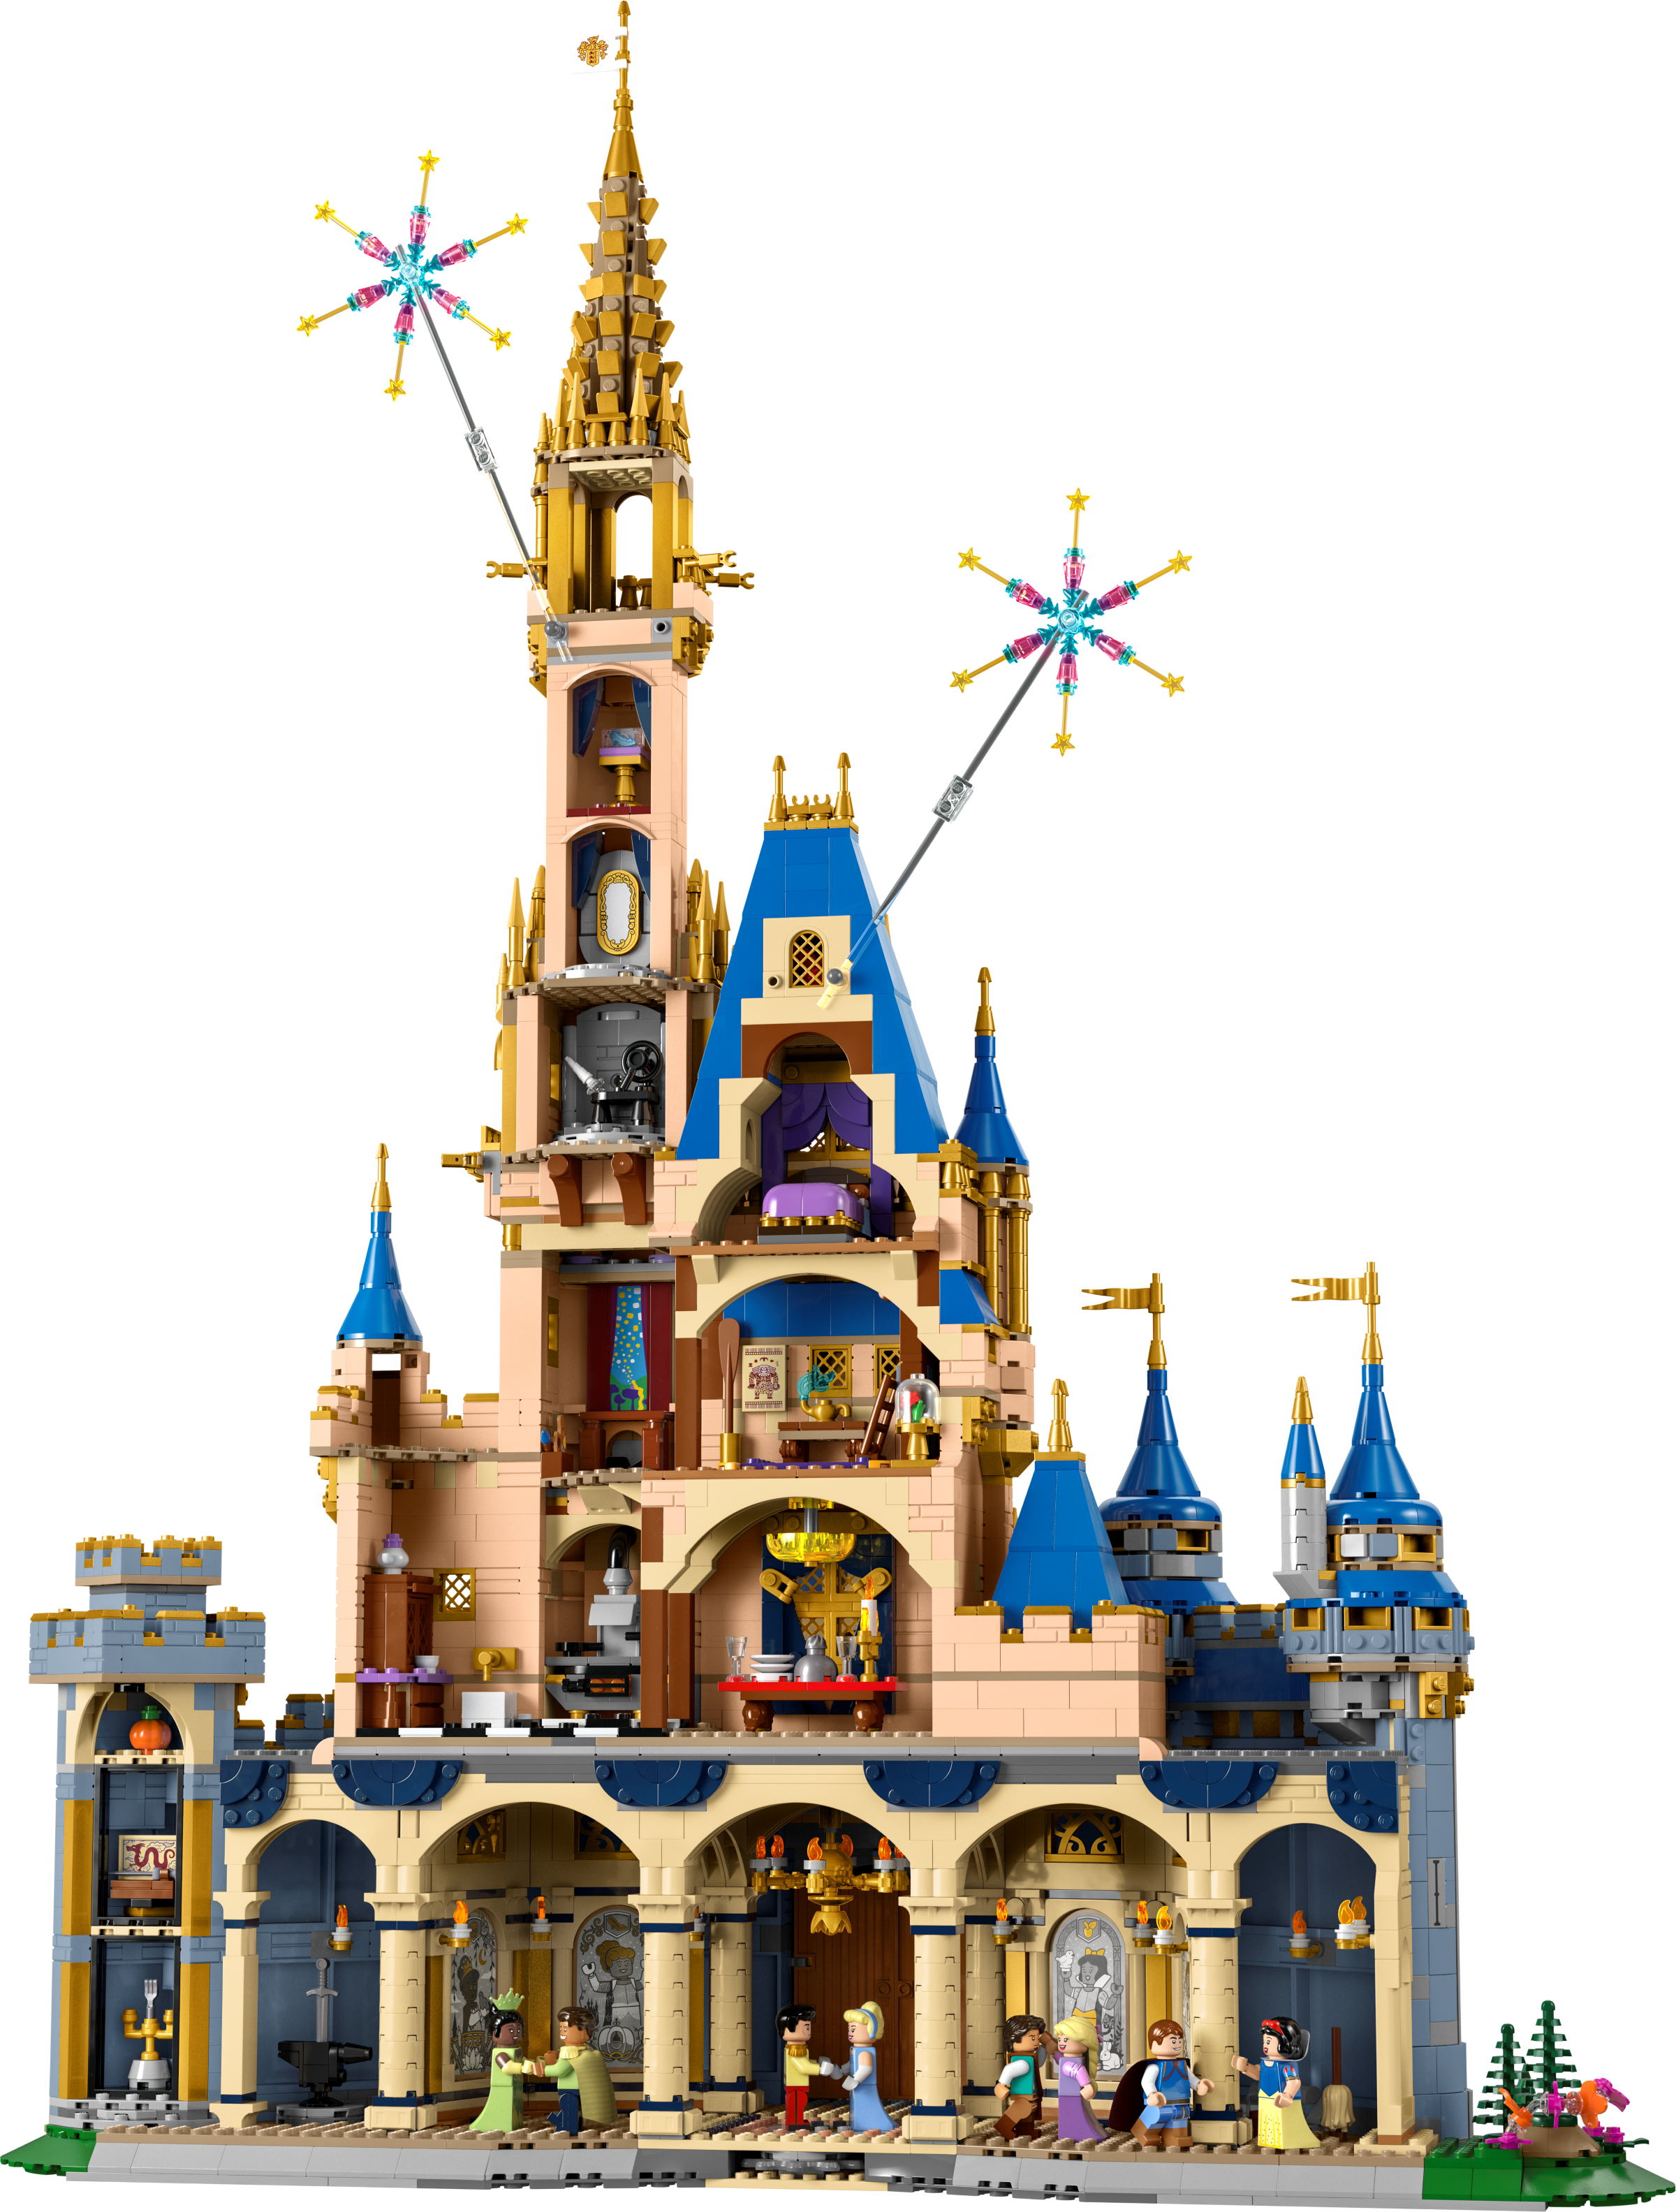 LEGO Disney 100th anniversary minifigures